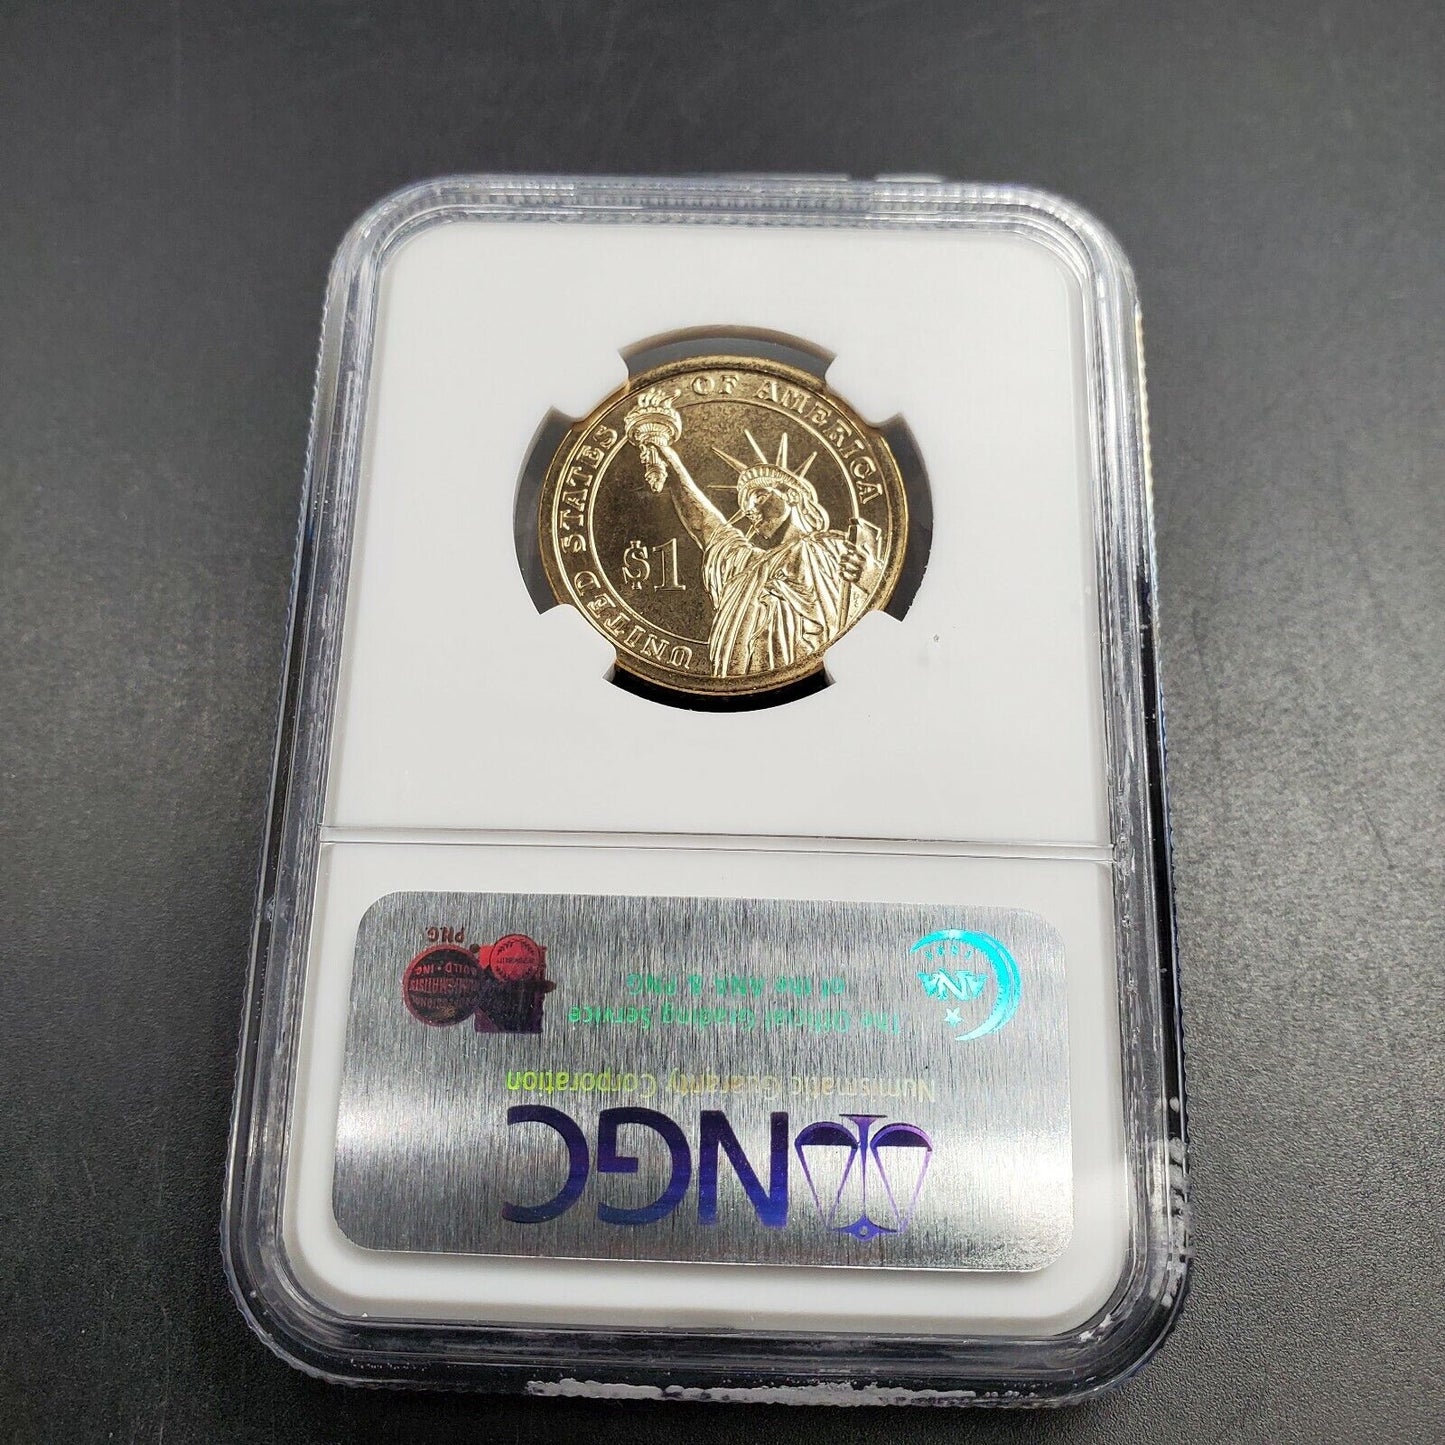 2007 D Thomas Jefferson Presidential Dollar Coin NGC SMS MS67 SATIN